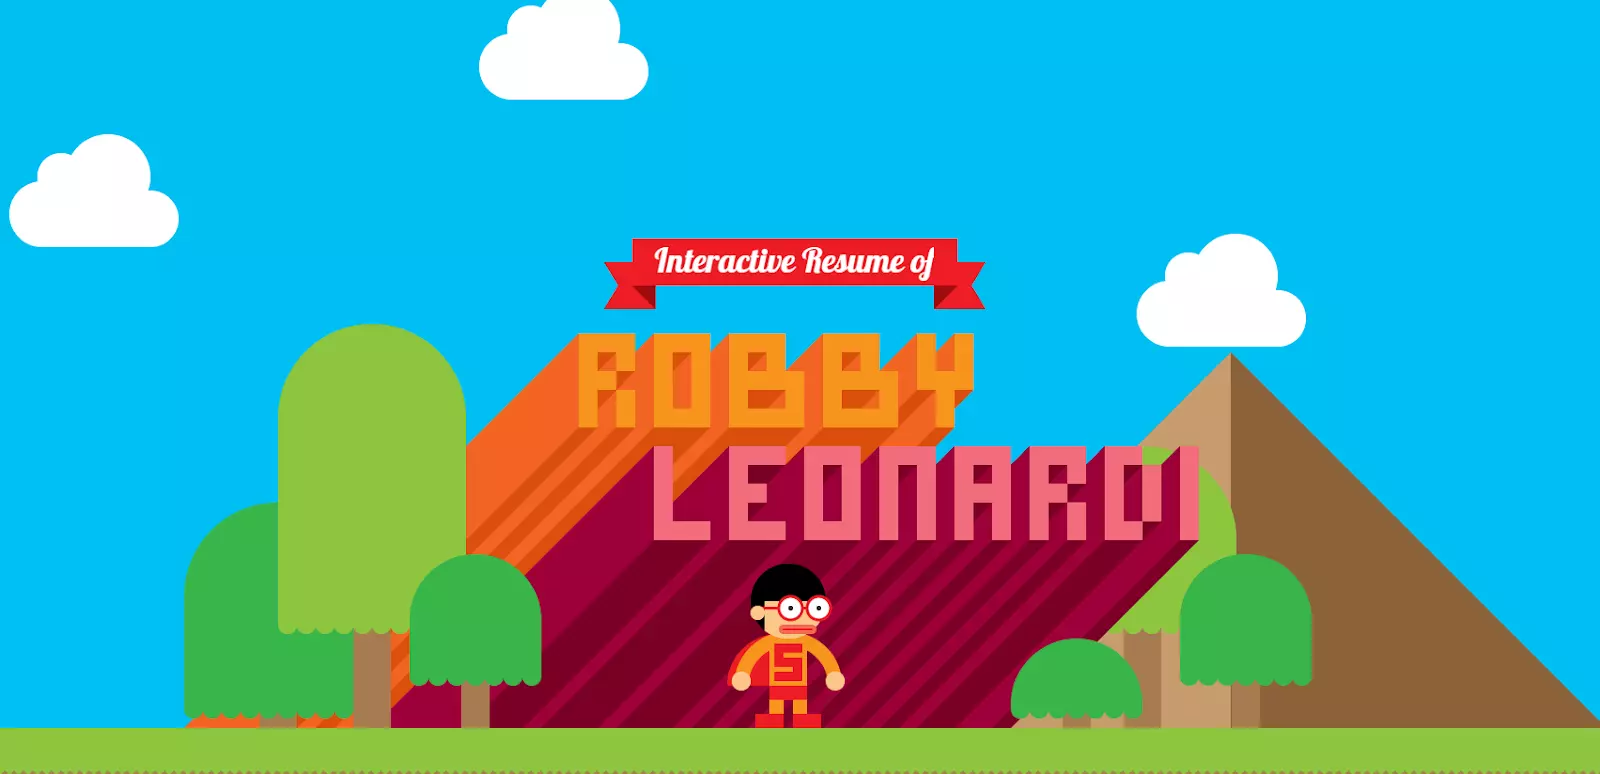 Robby Leonardi's front-end developer portfolio with gamification elements